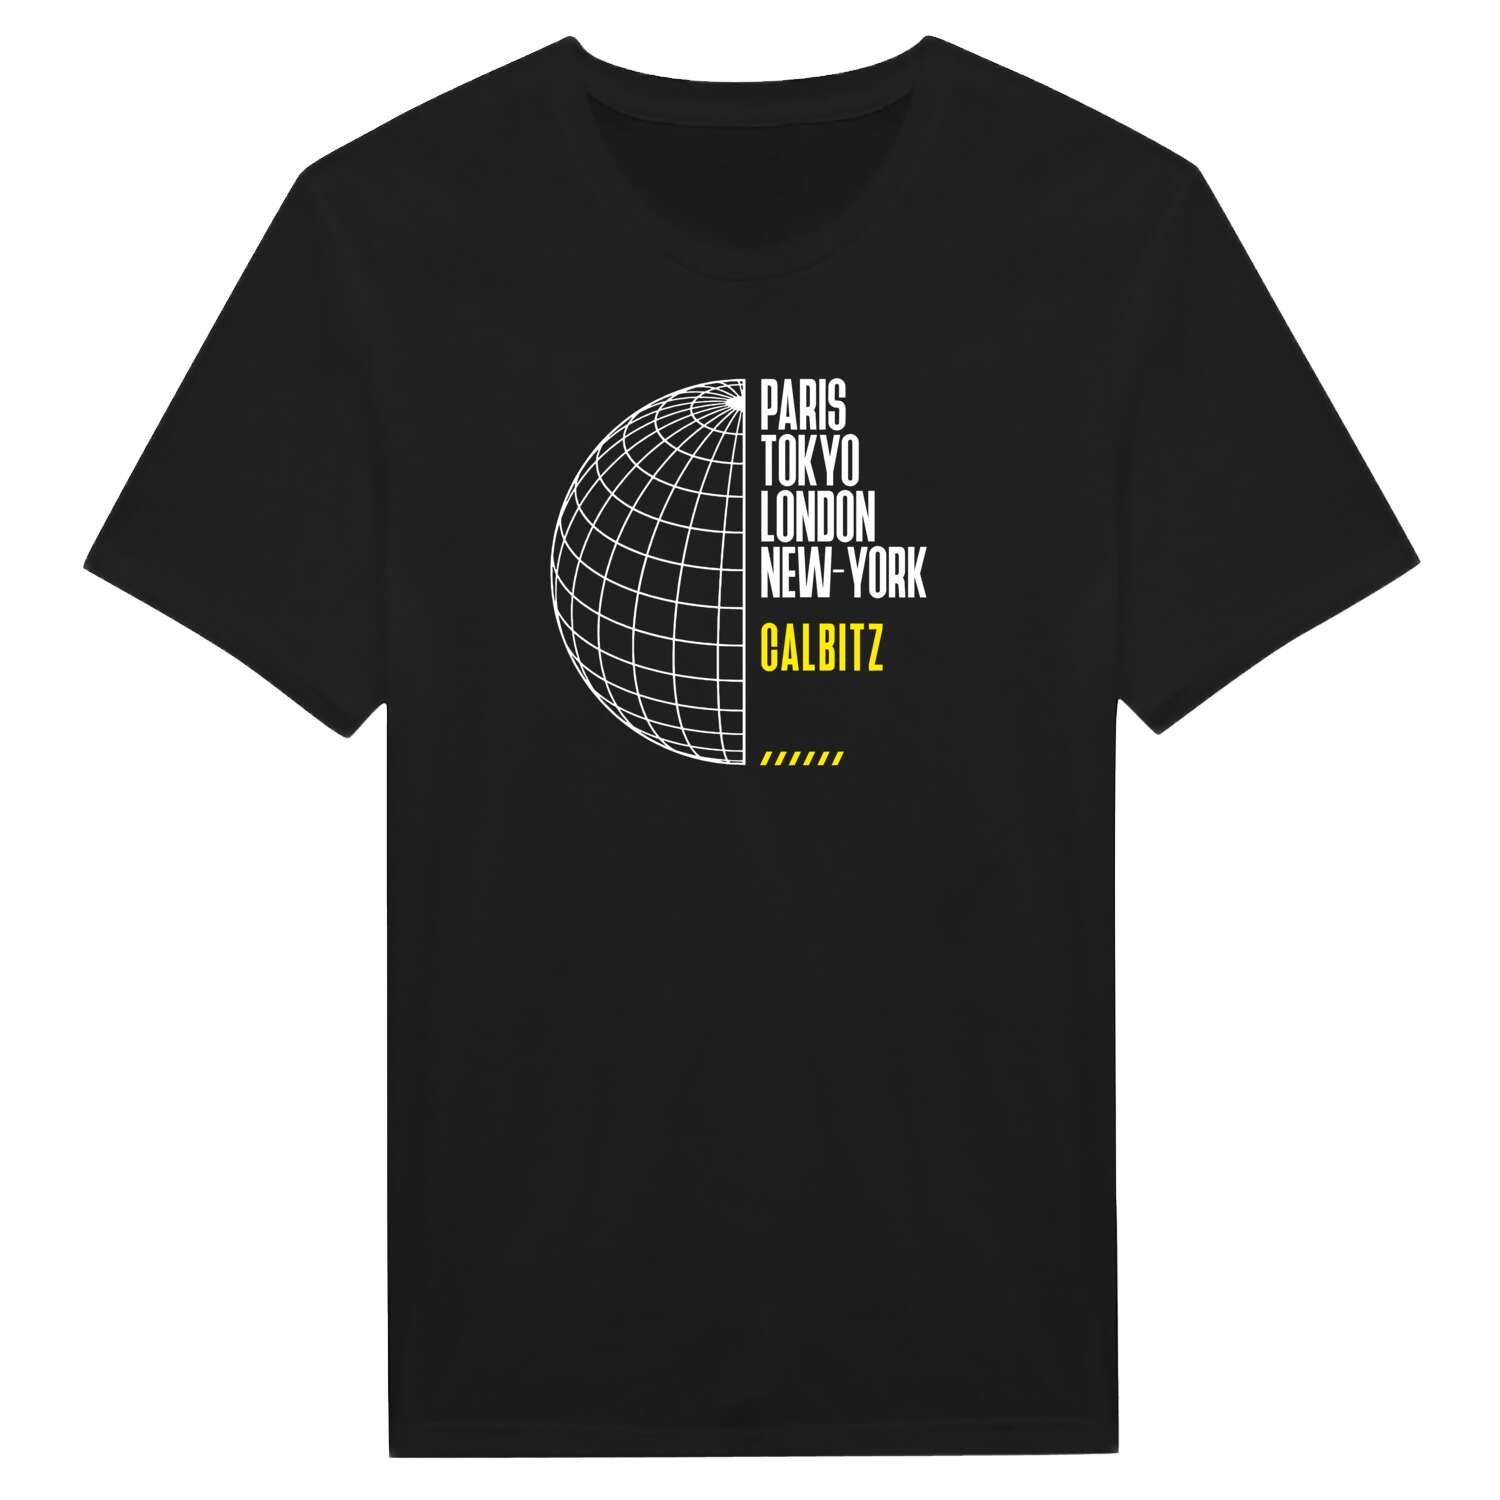 Calbitz T-Shirt »Paris Tokyo London«